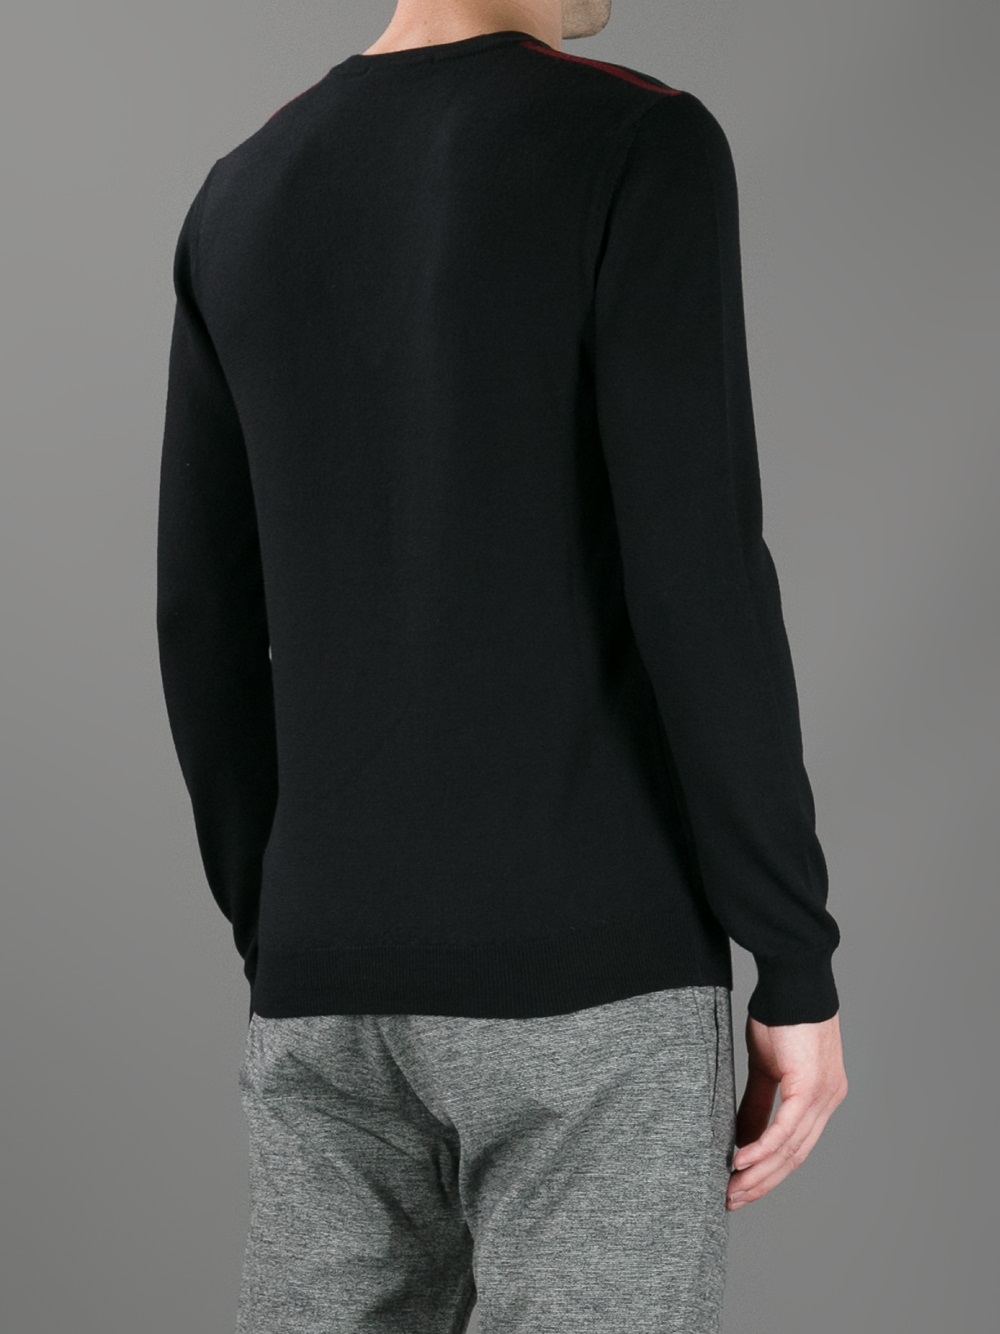 Lyst - Gucci Vneck Sweater in Black for Men